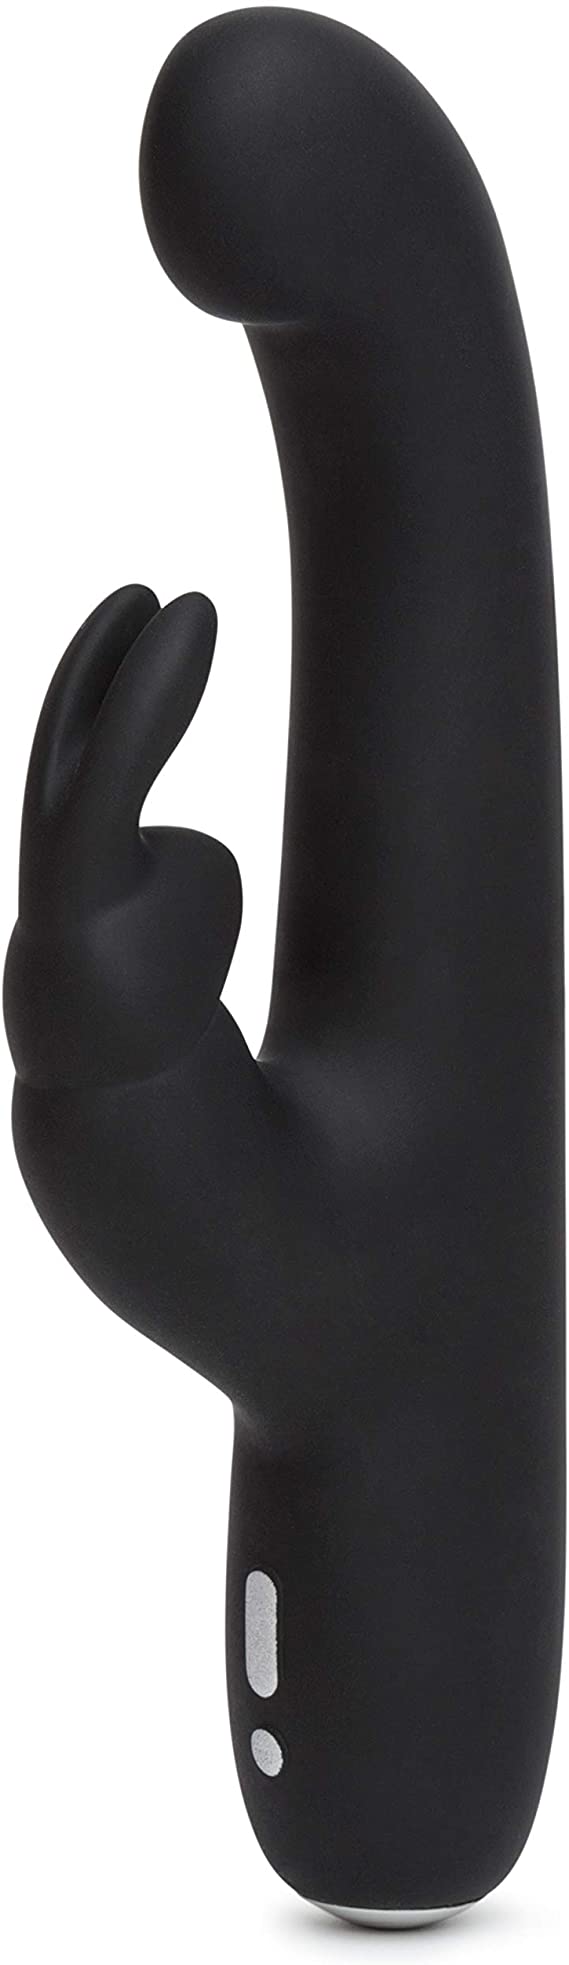 Happy Rabbit Slimline G-Spot Rechargeable Rabbit Vibrator, Black